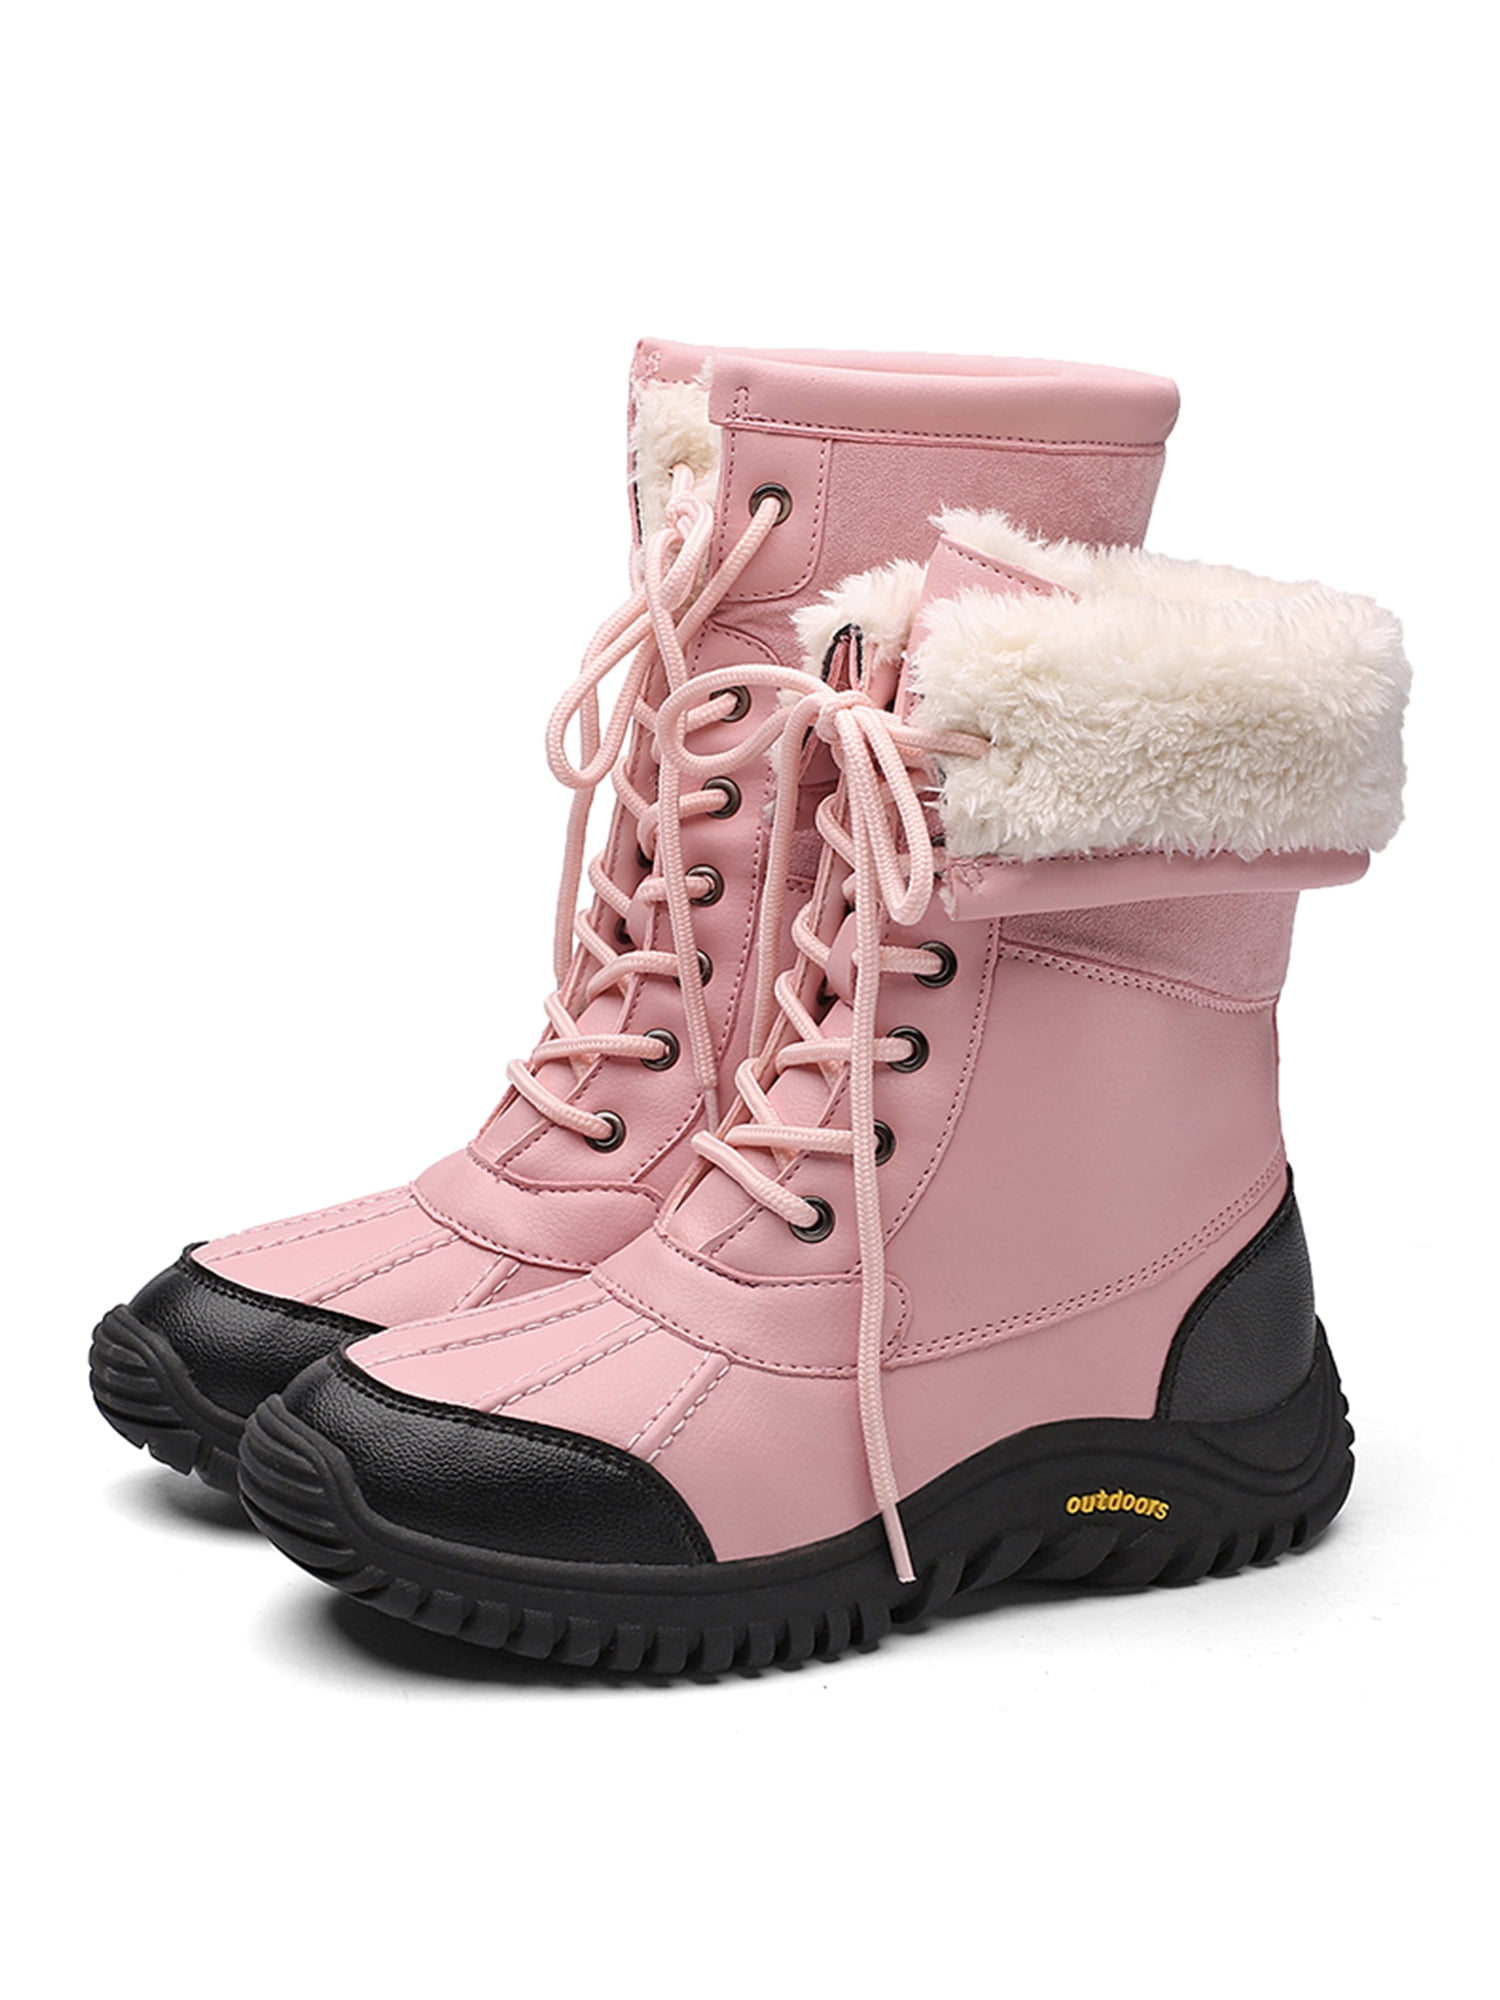 Own Shoe - Women Snow Boots Women Fashionable Snow Boots ...